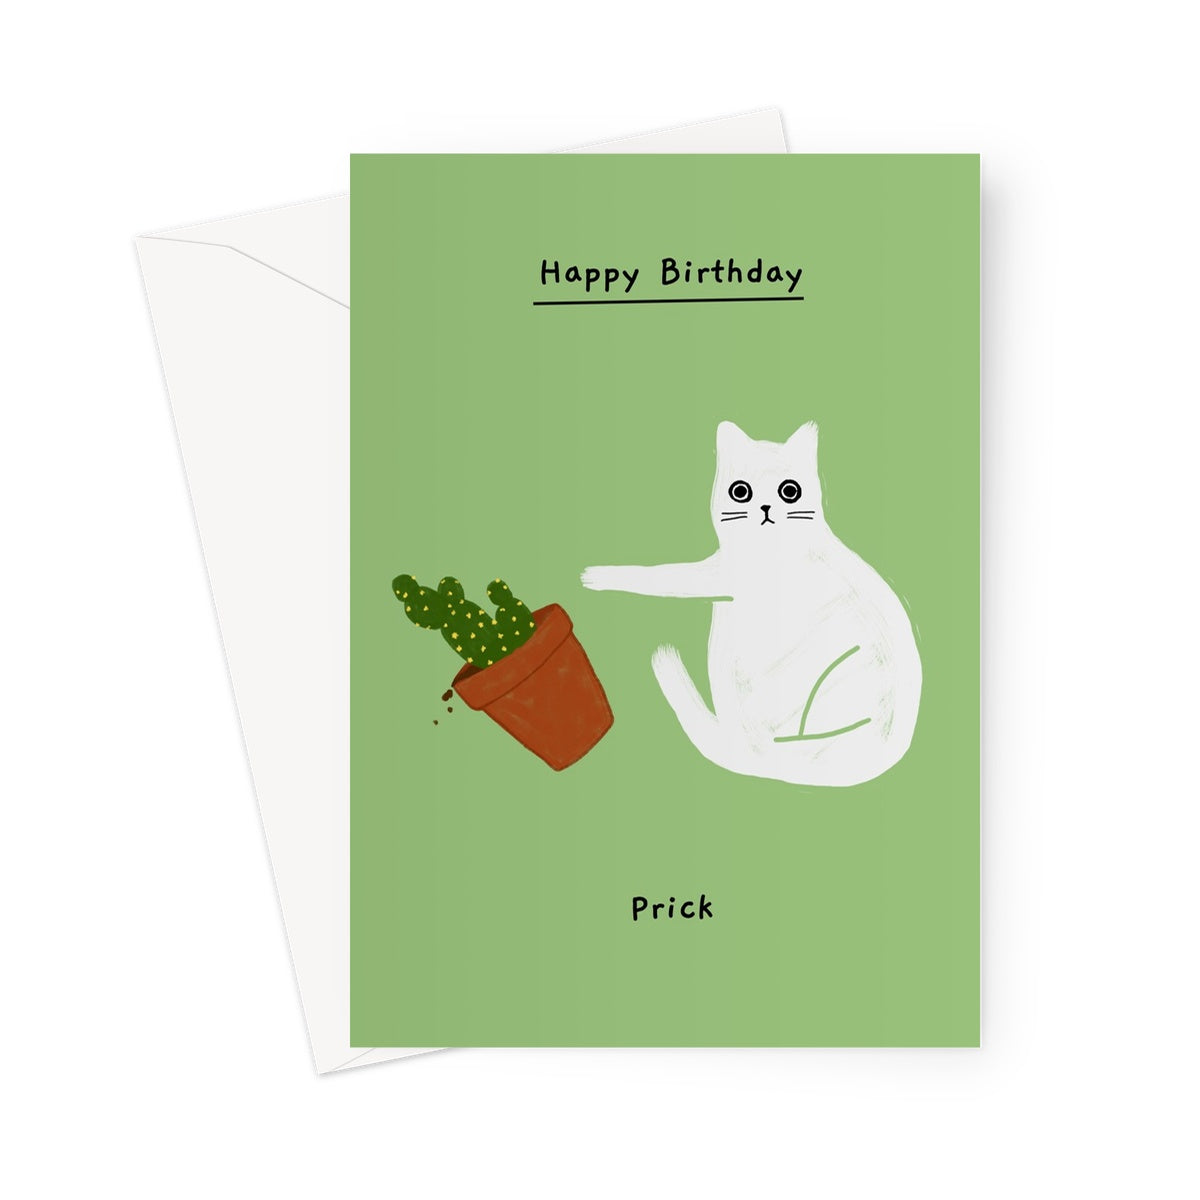 Ken the cat funny birthday card in green - happy birthday prick